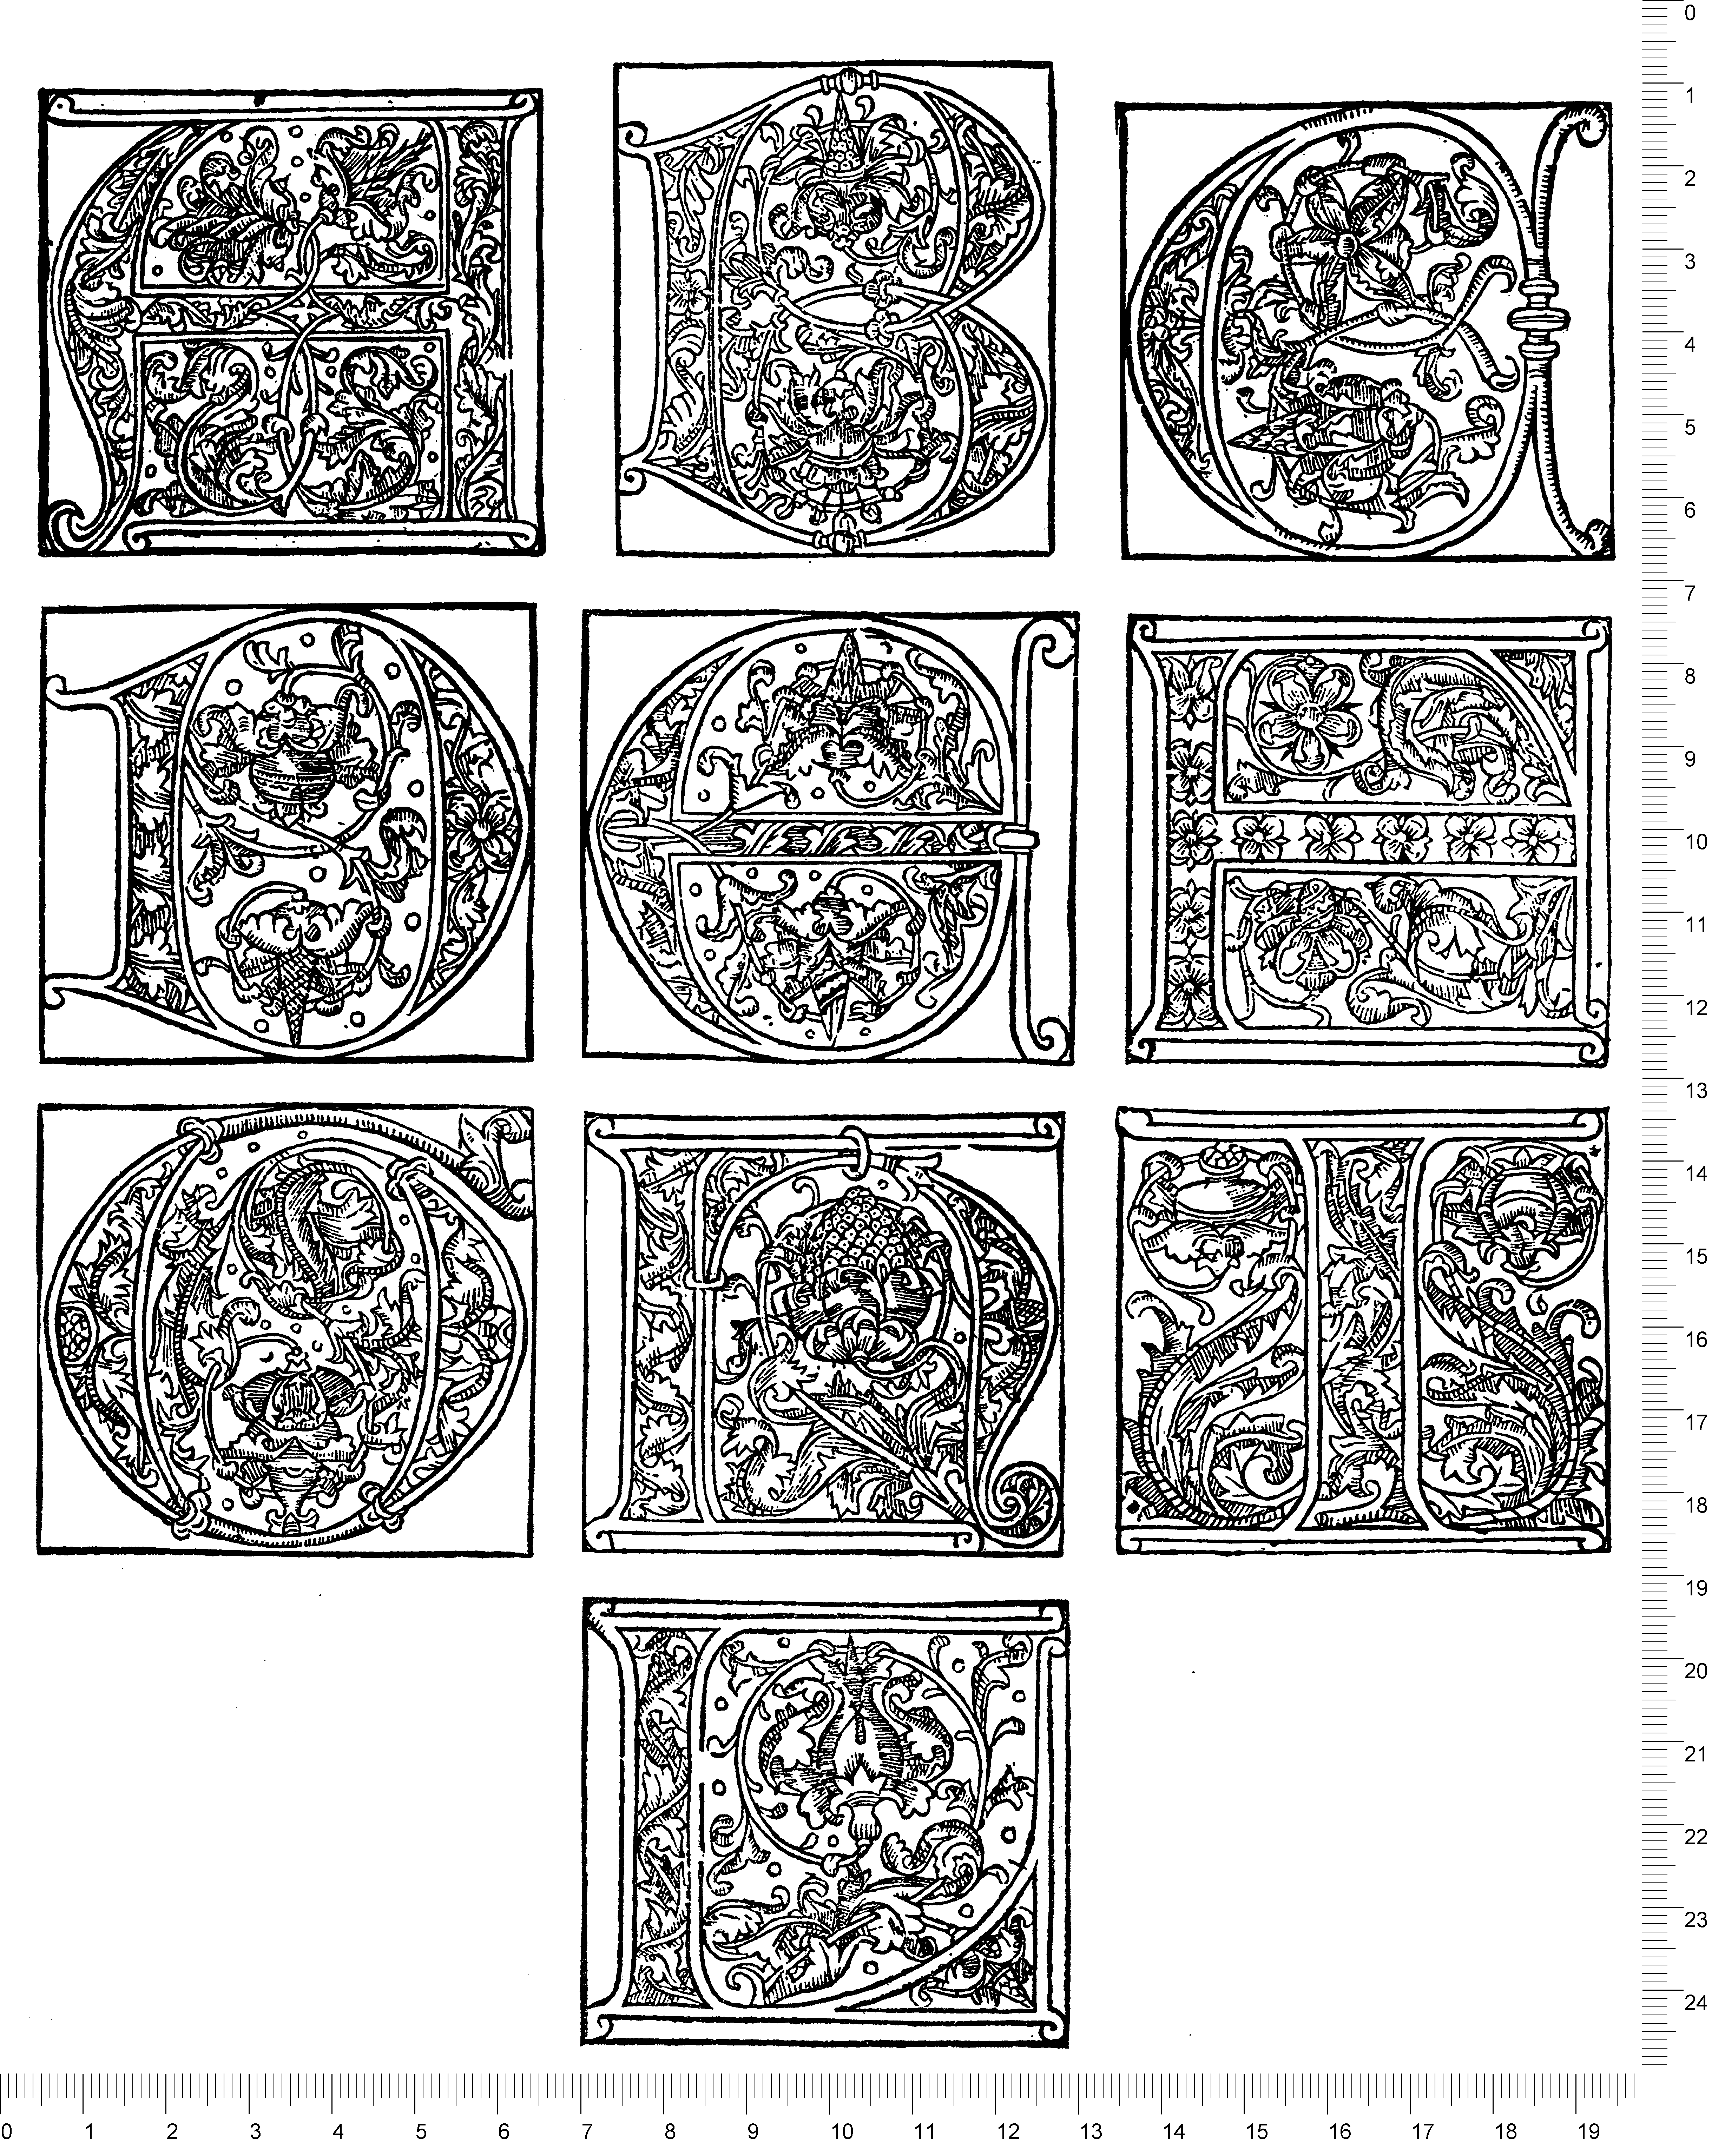 Abbildung der GfT-Tafeln vonGfT1518.1